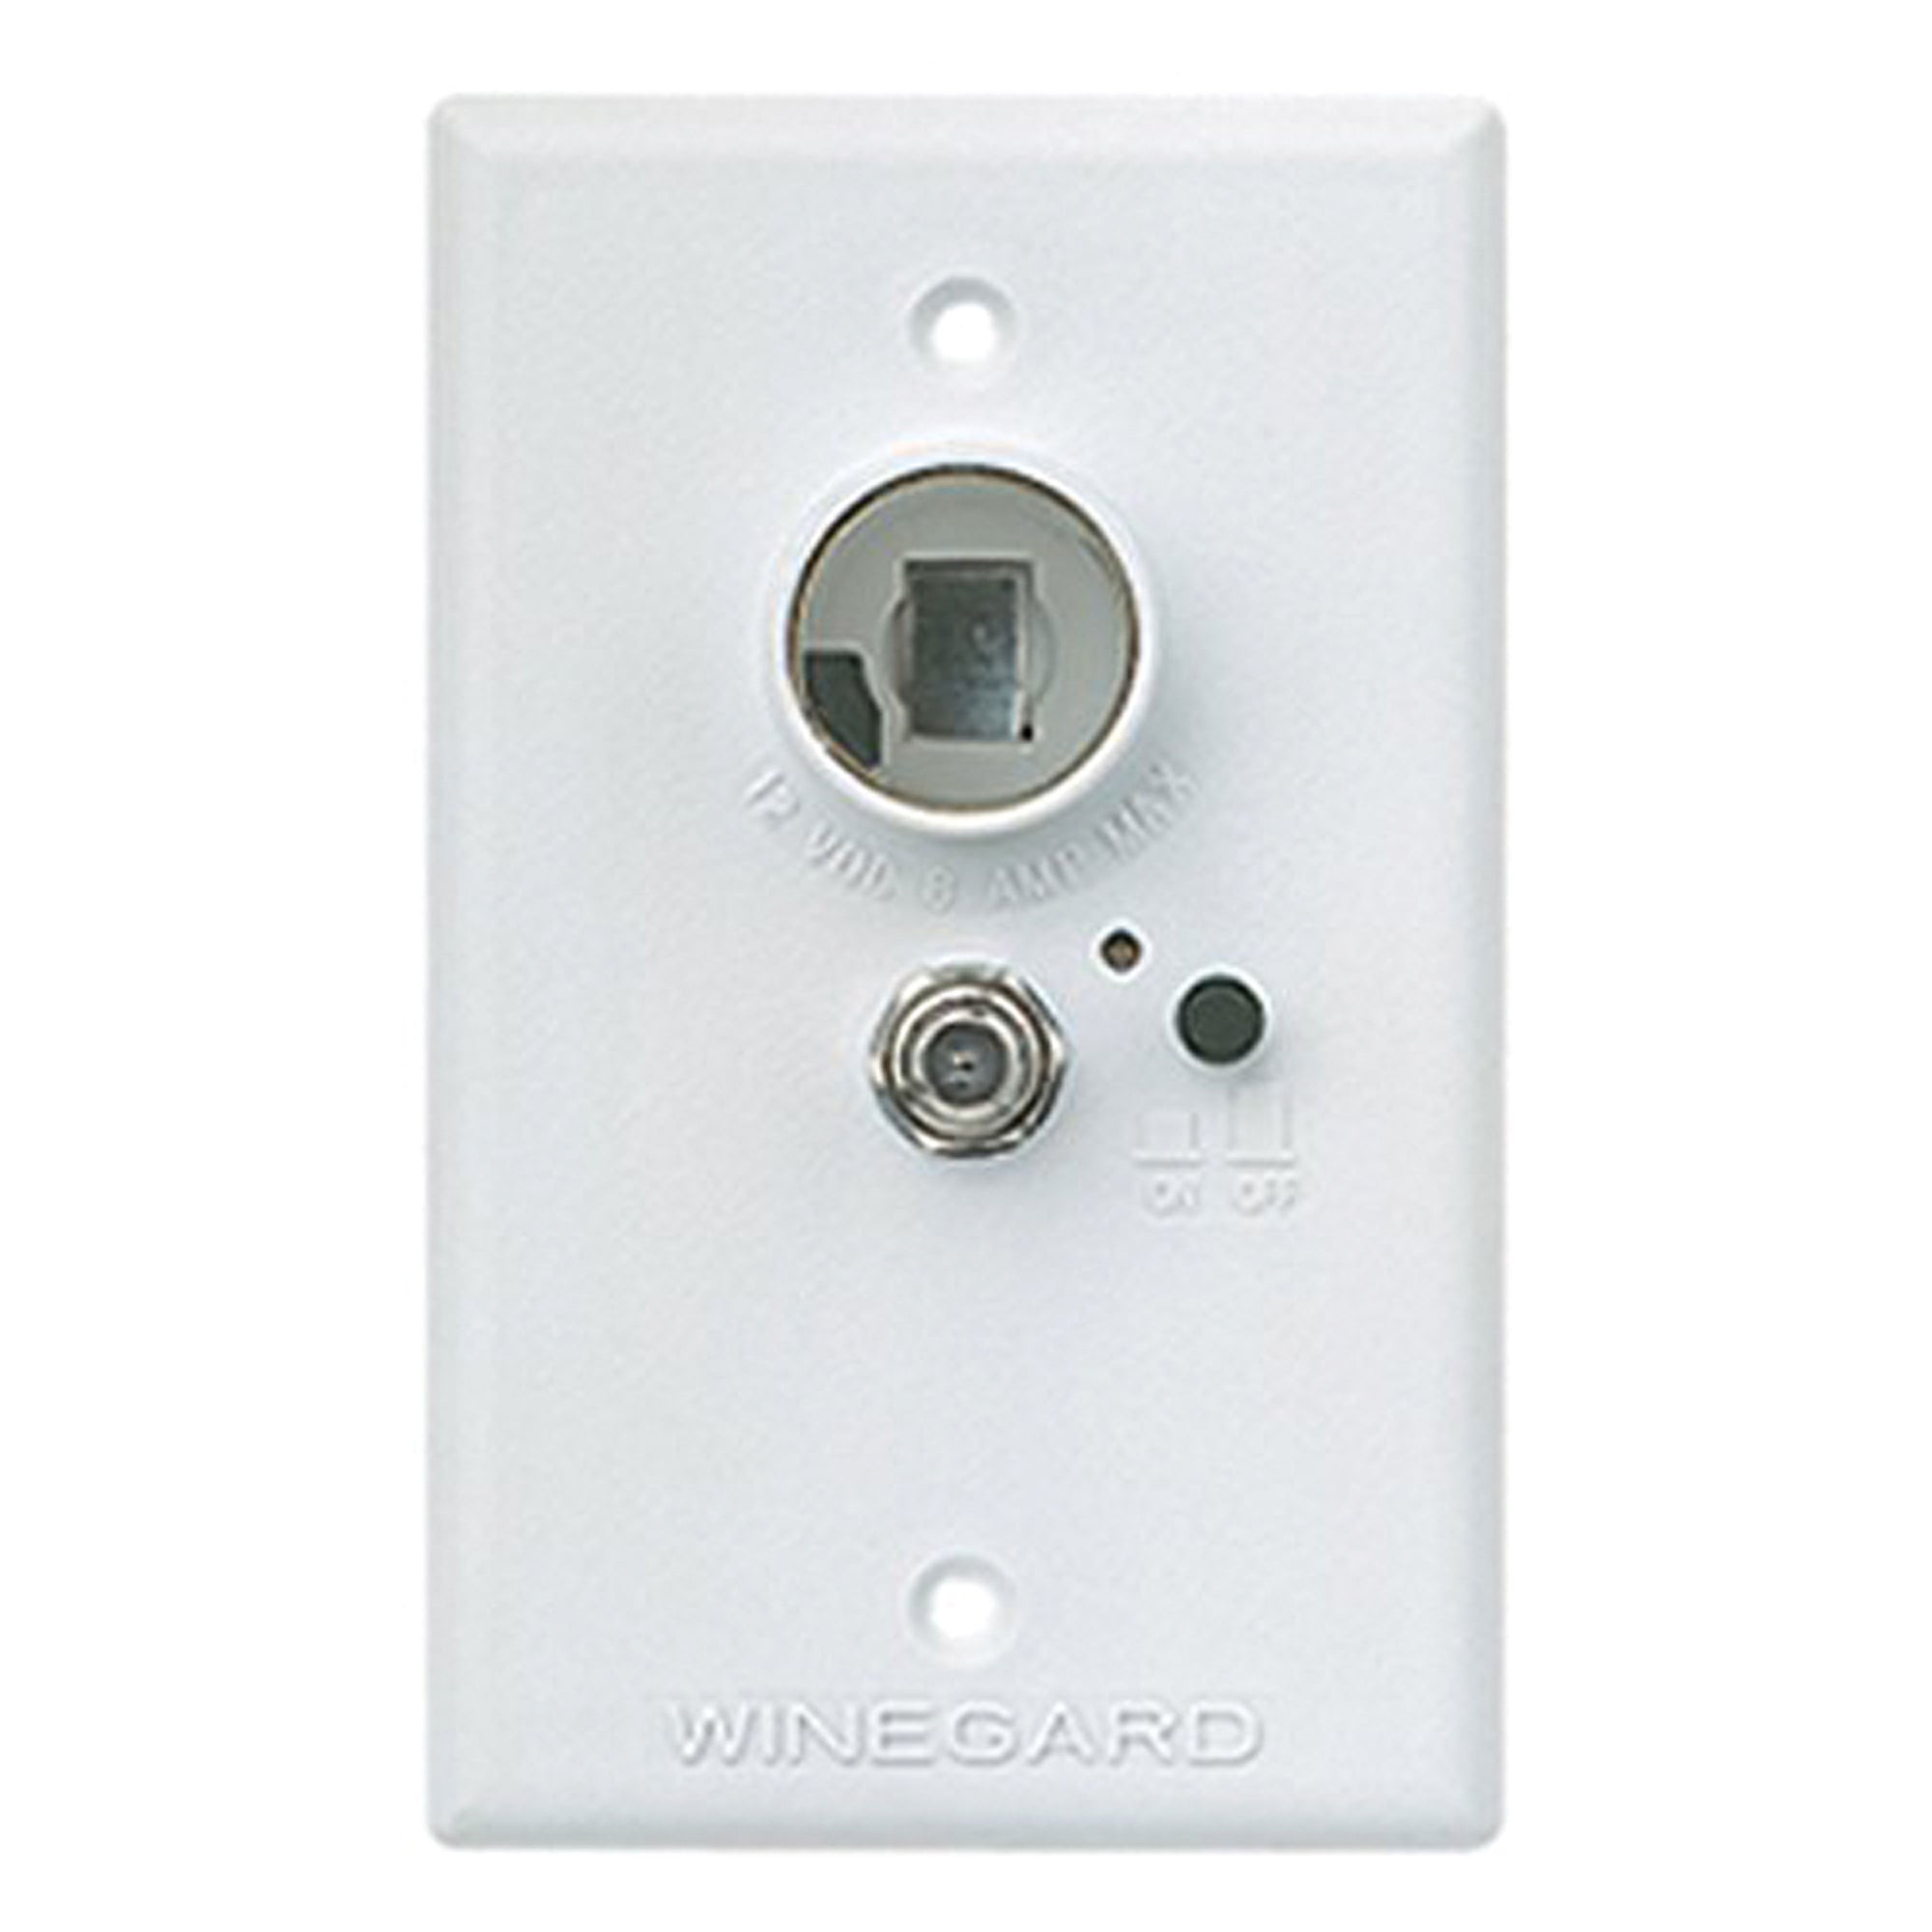 Winegard RA-7296 Wall Plate Signal Amplifier - White